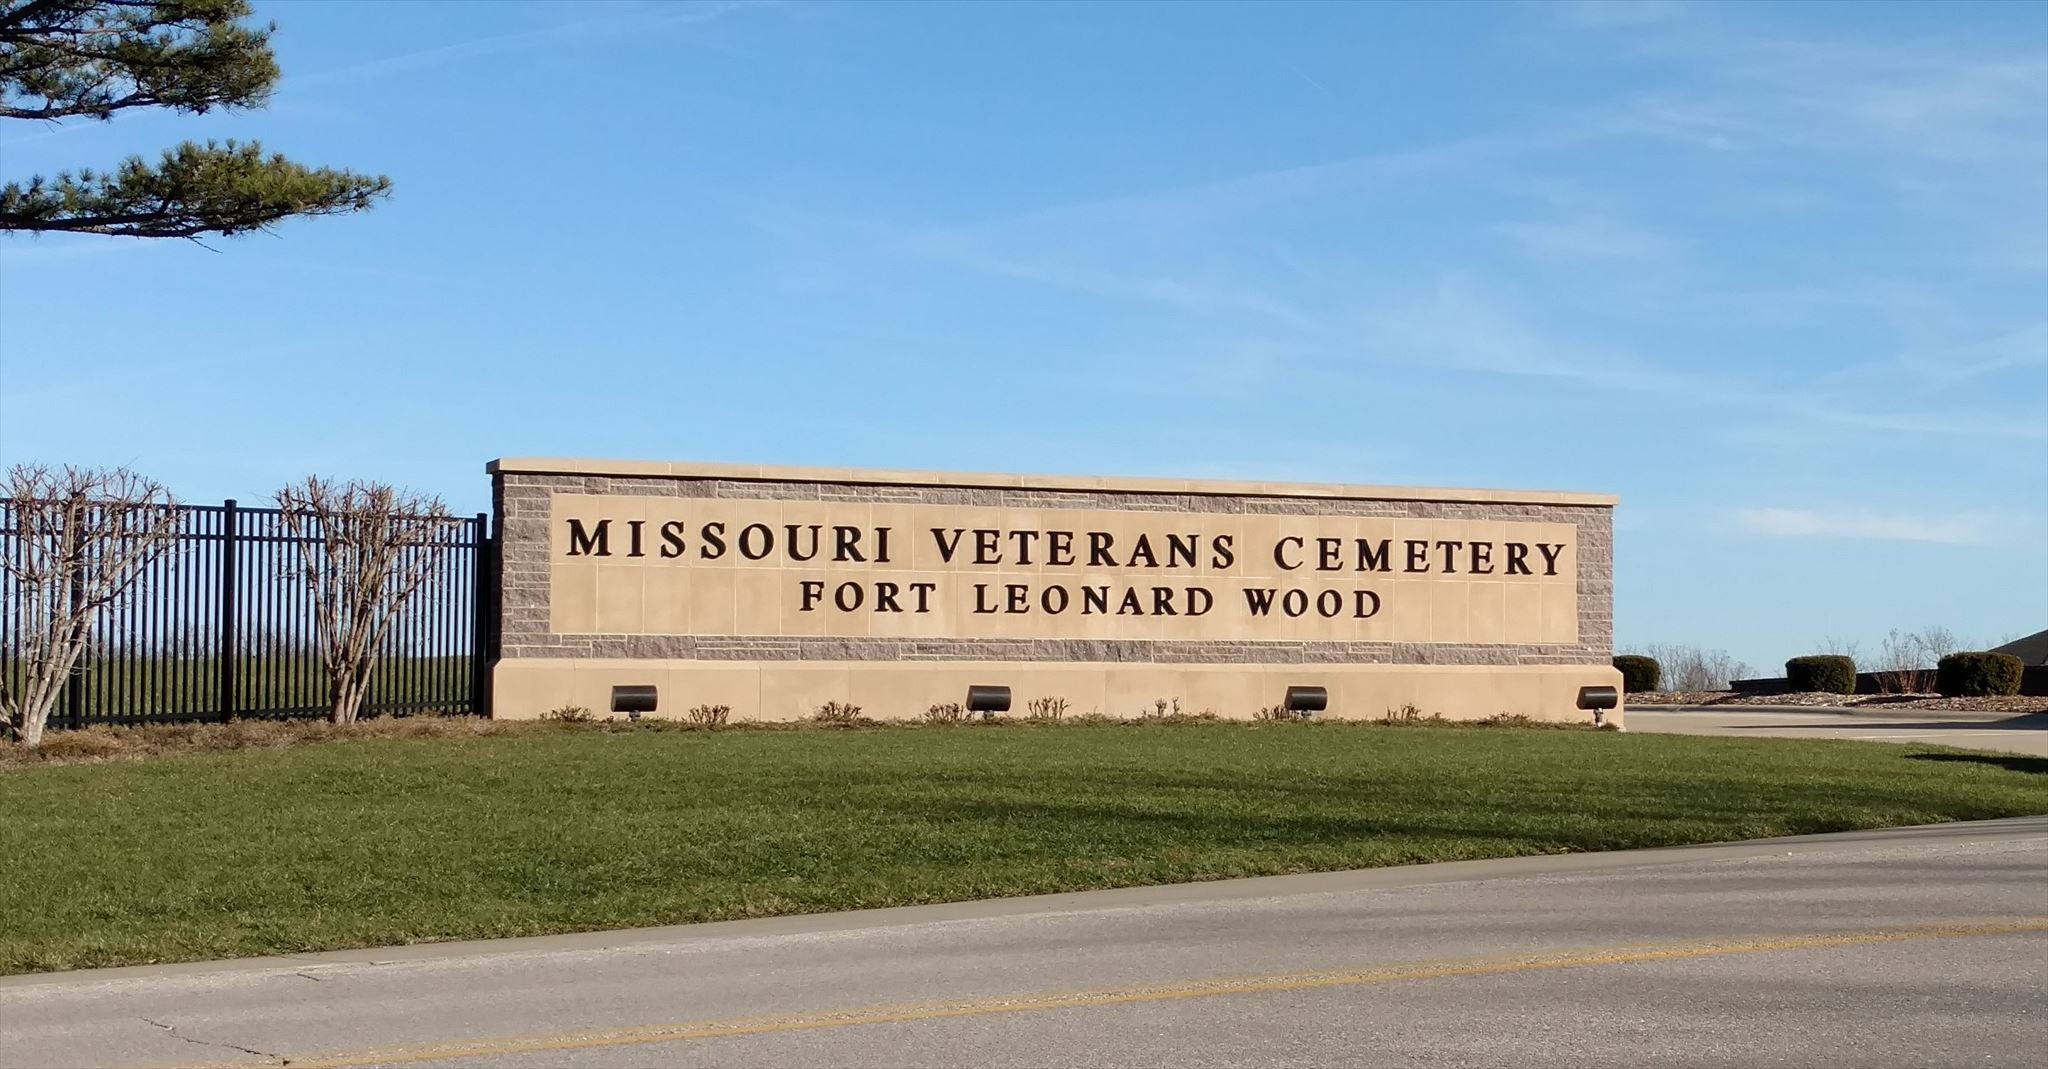 Missouri Veterans Cemetery Fort Leonard Wood